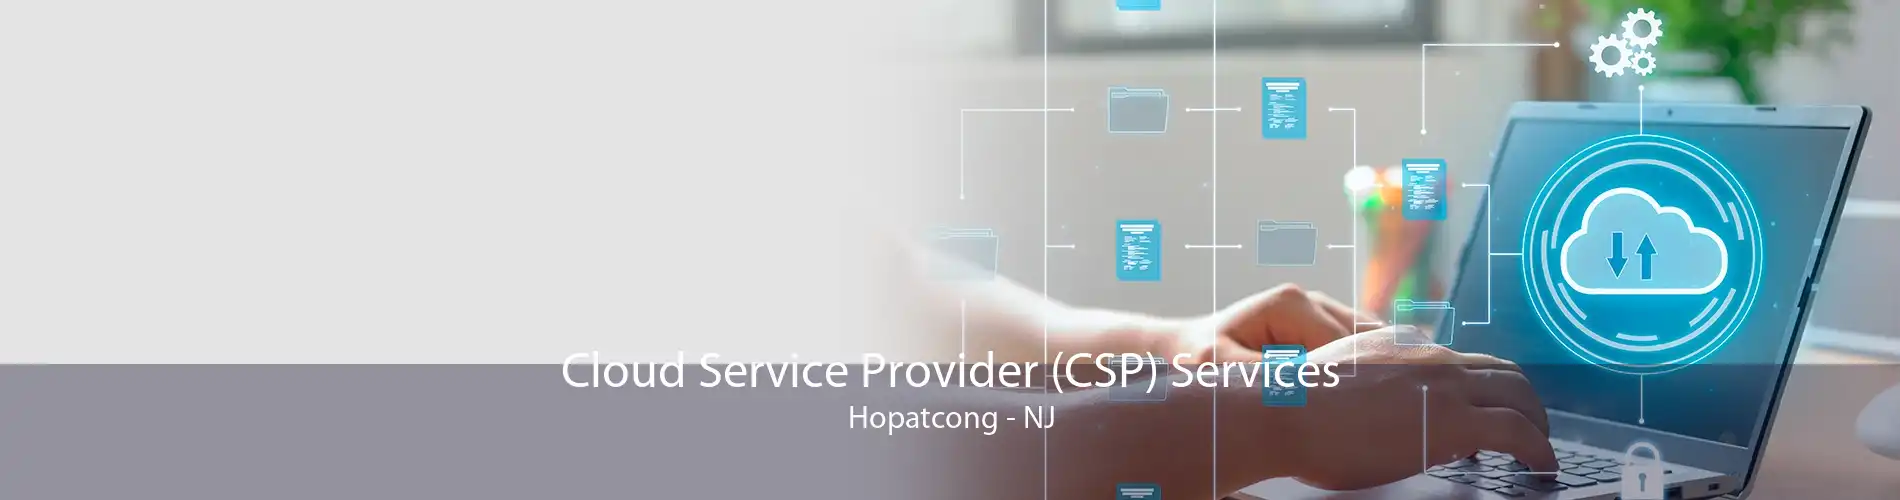 Cloud Service Provider (CSP) Services Hopatcong - NJ